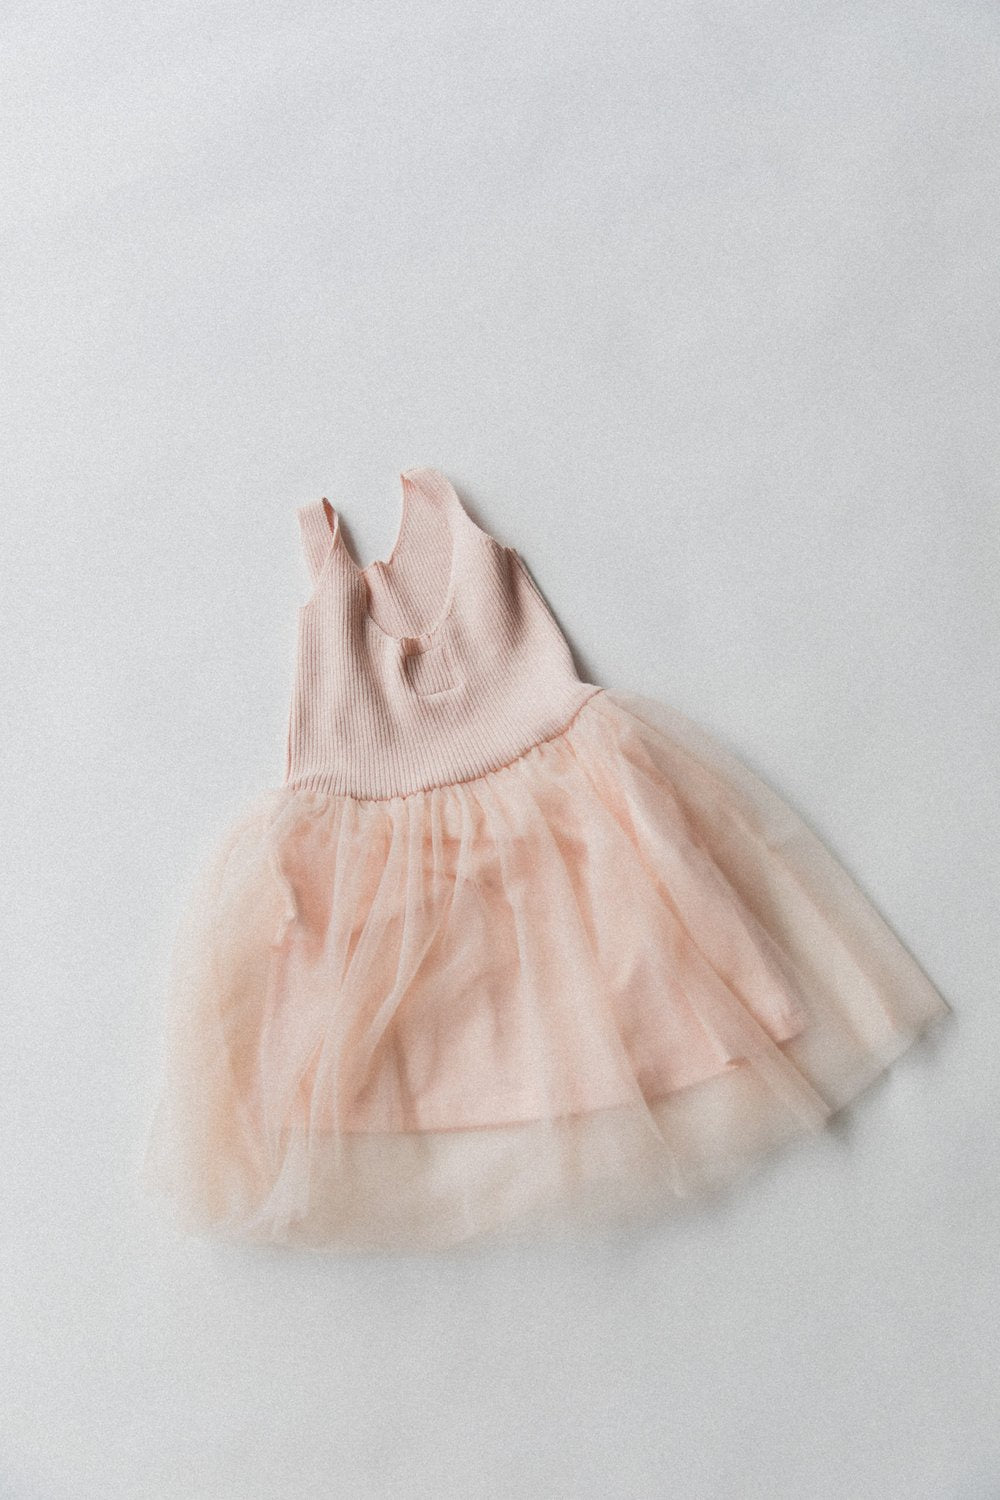 Raised By Water - The Original Sienna Dress - Blush